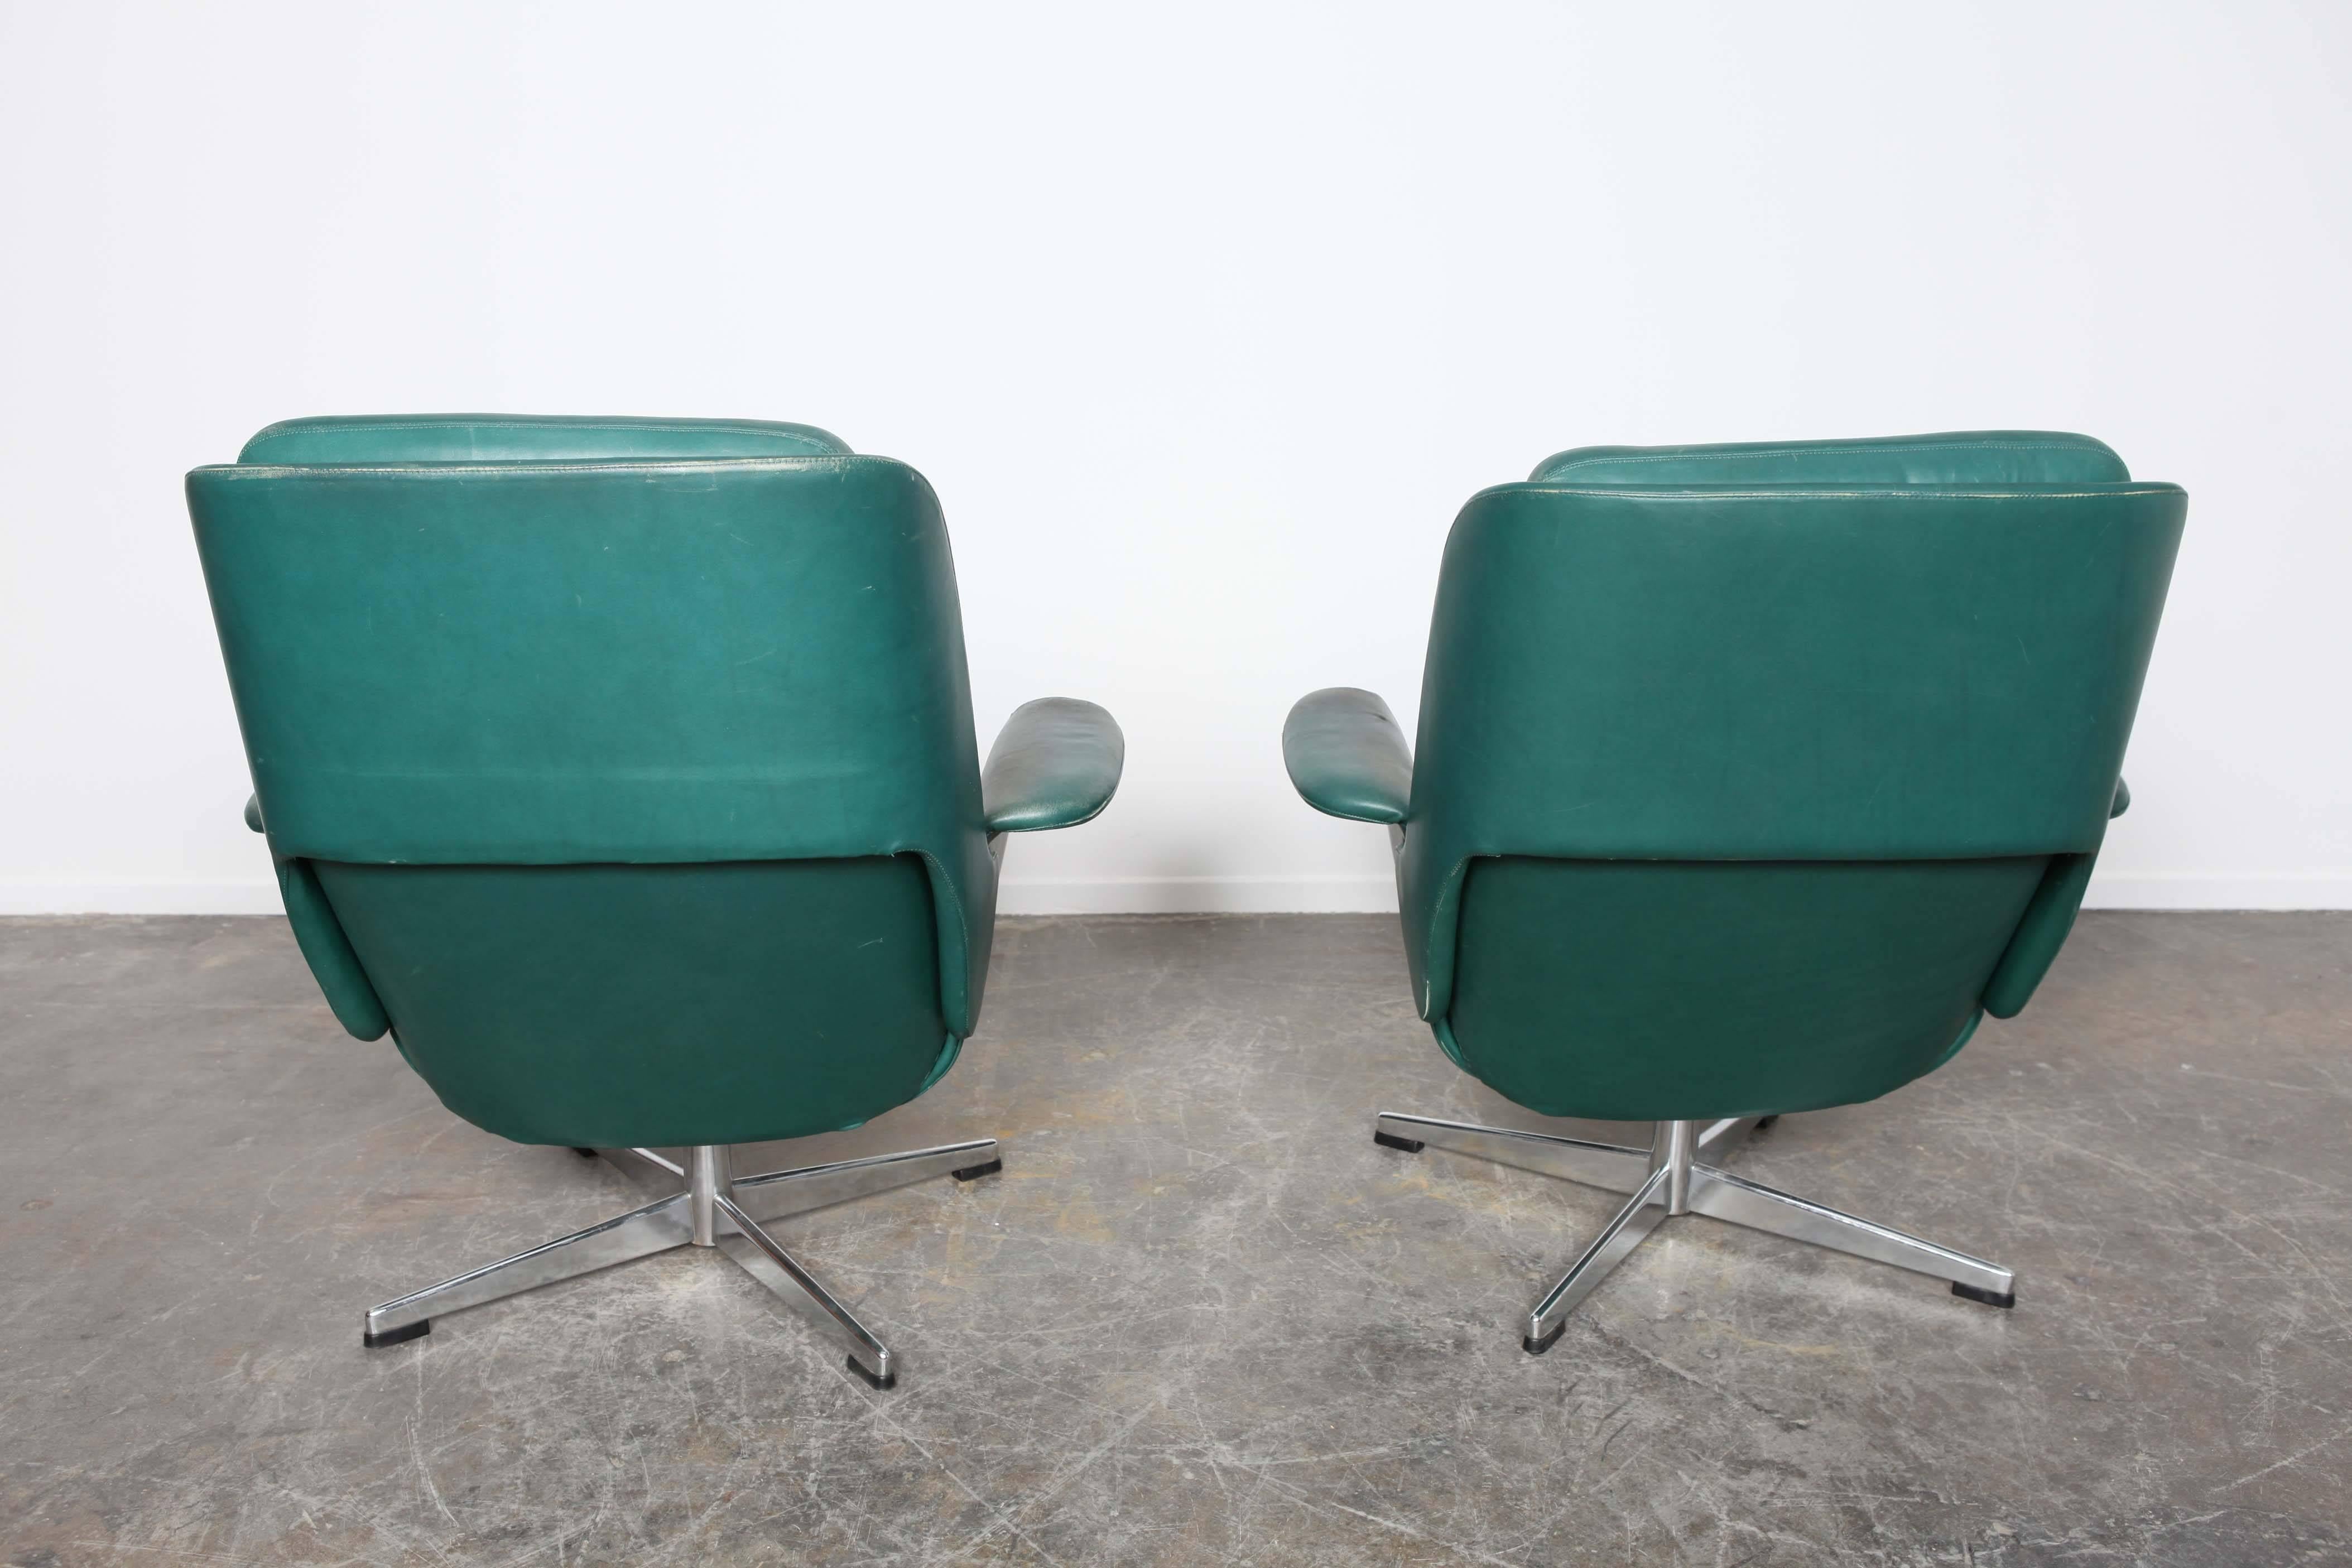 Mid-20th Century Danish Midcentury Green Leather Swivel Lounge Chairs